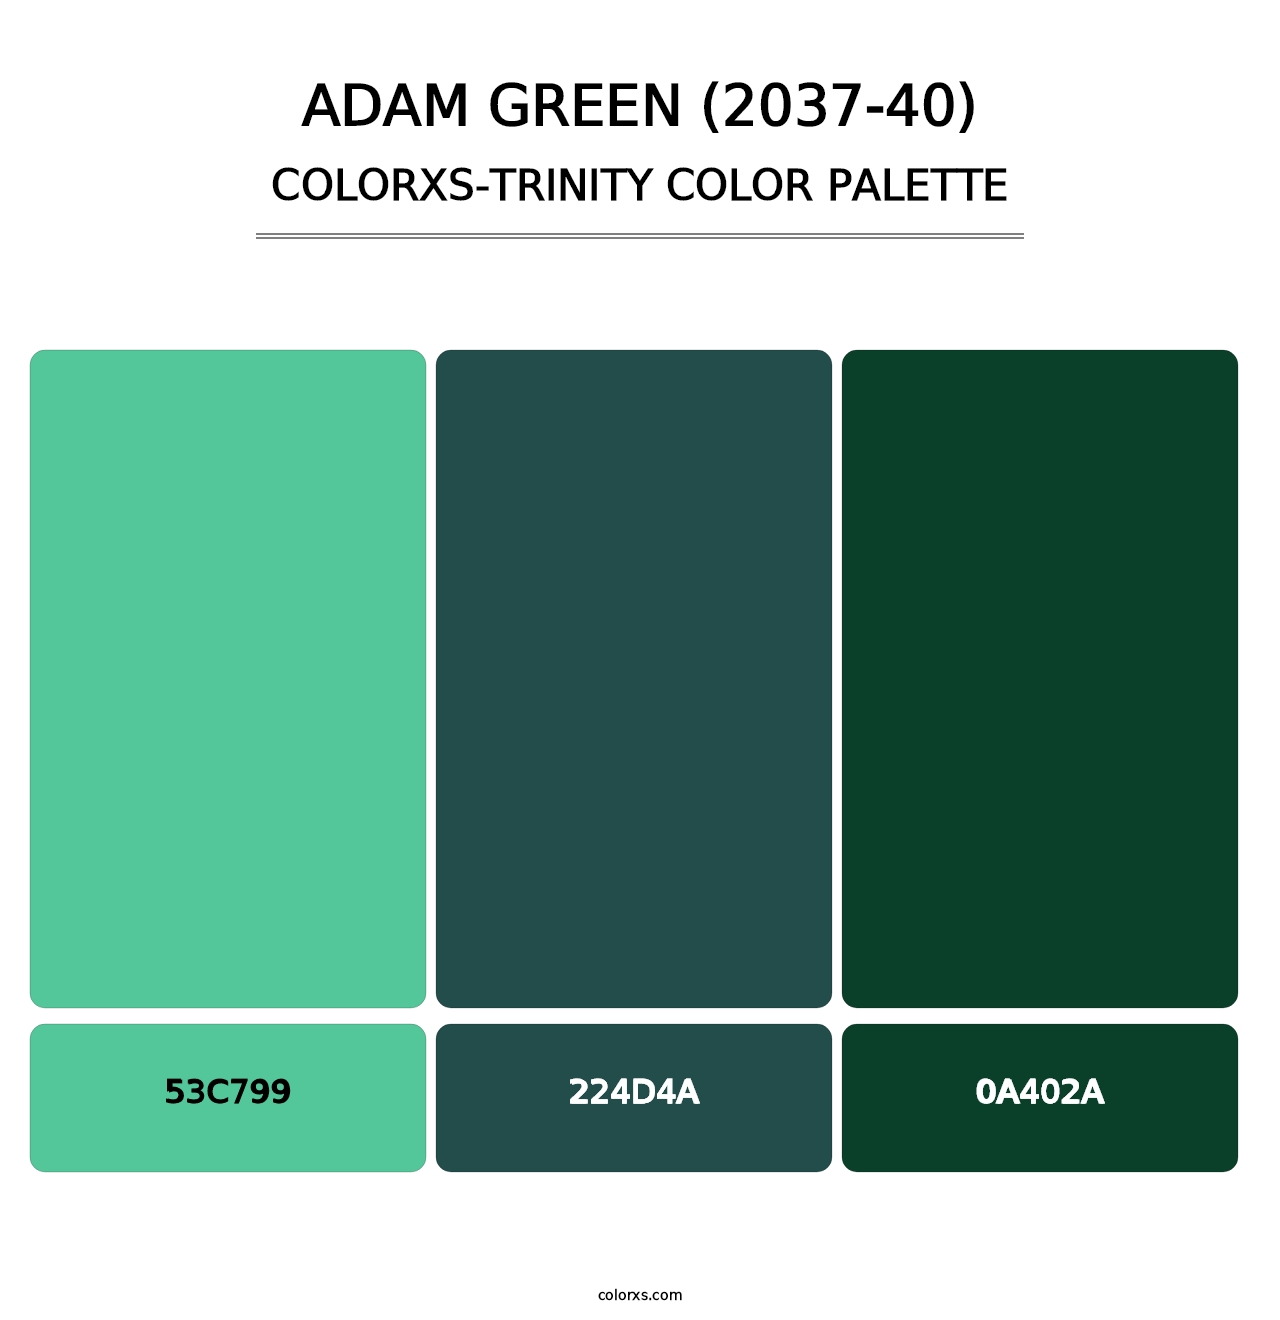 Adam Green (2037-40) - Colorxs Trinity Palette